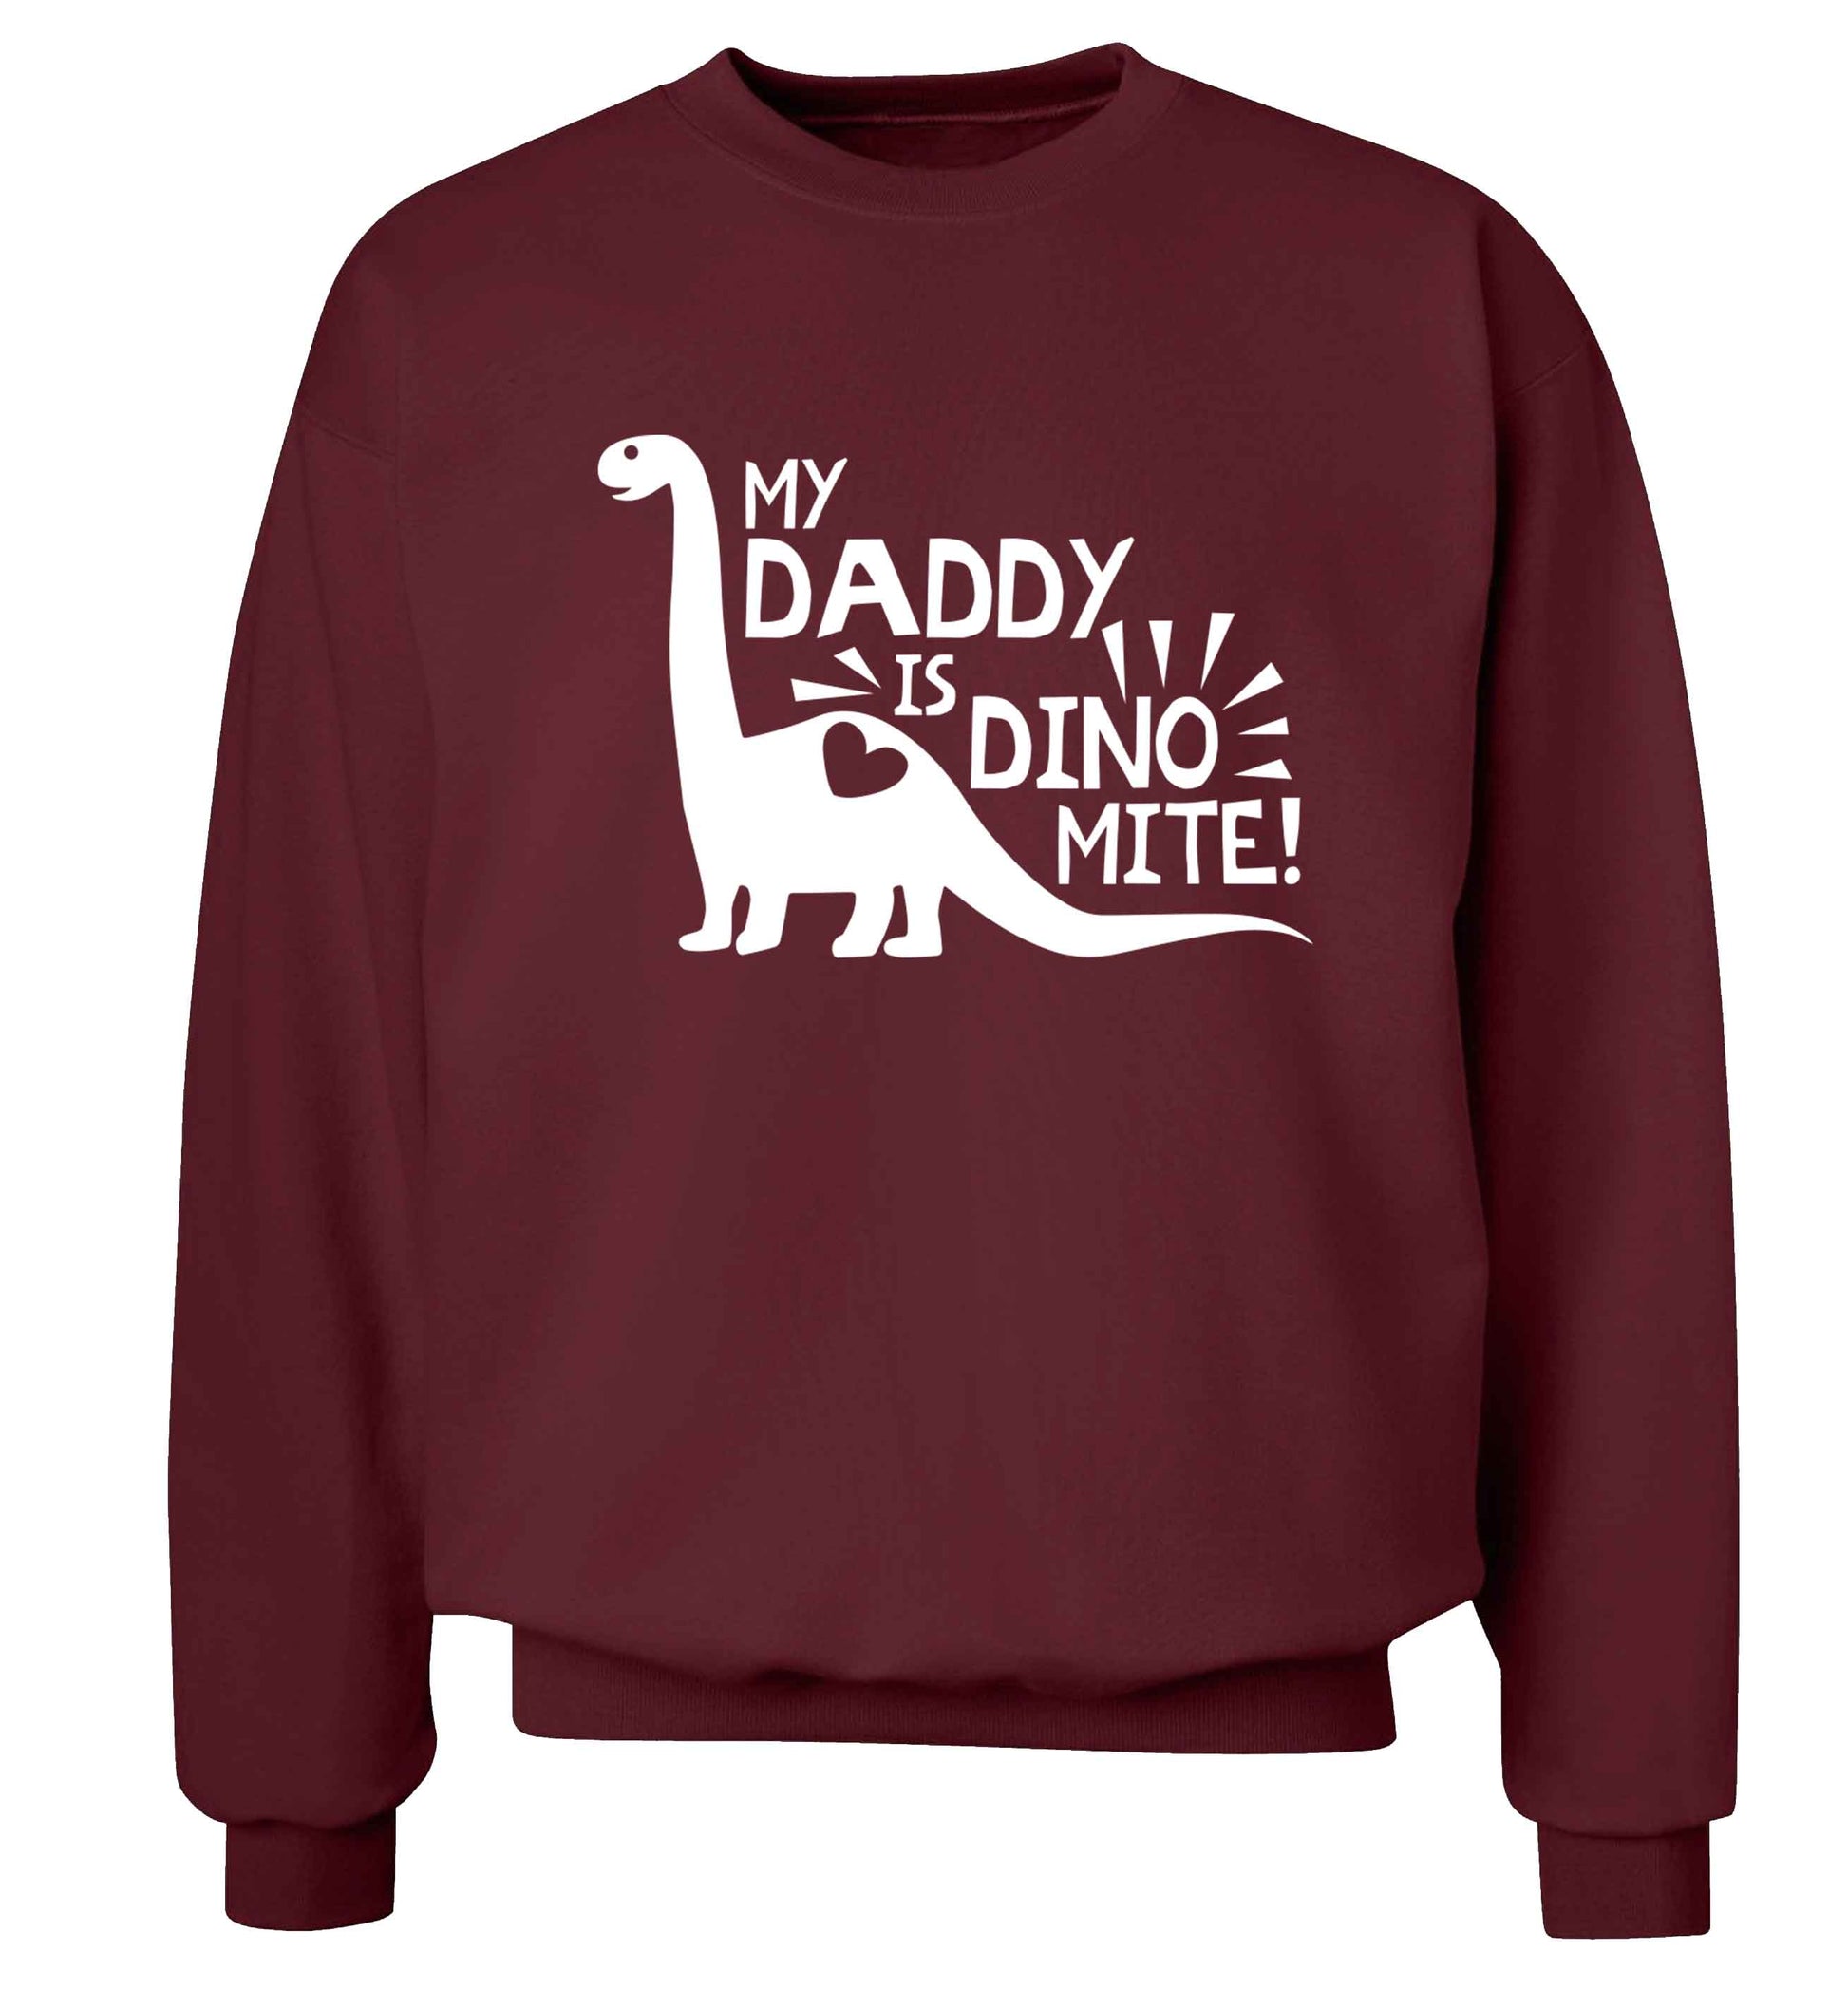 My daddy is dinomite! Adult's unisex maroon Sweater 2XL